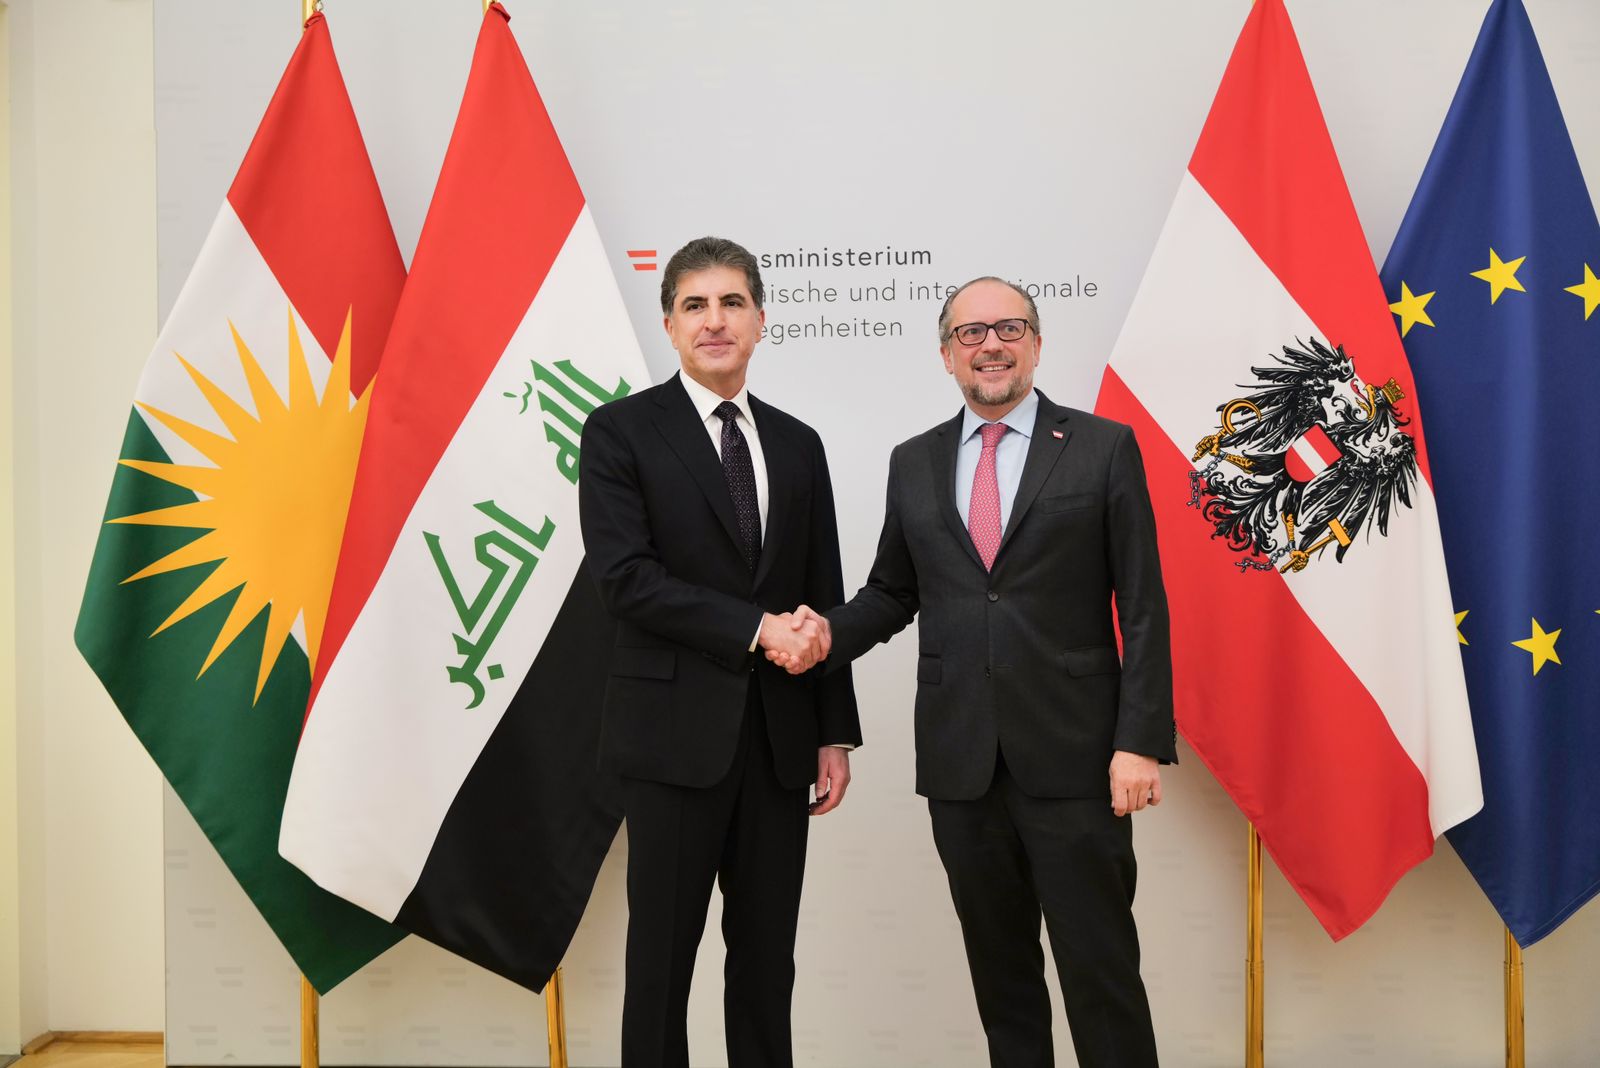 Kurdistans President meets Austrian Foreign Minister in Vienna